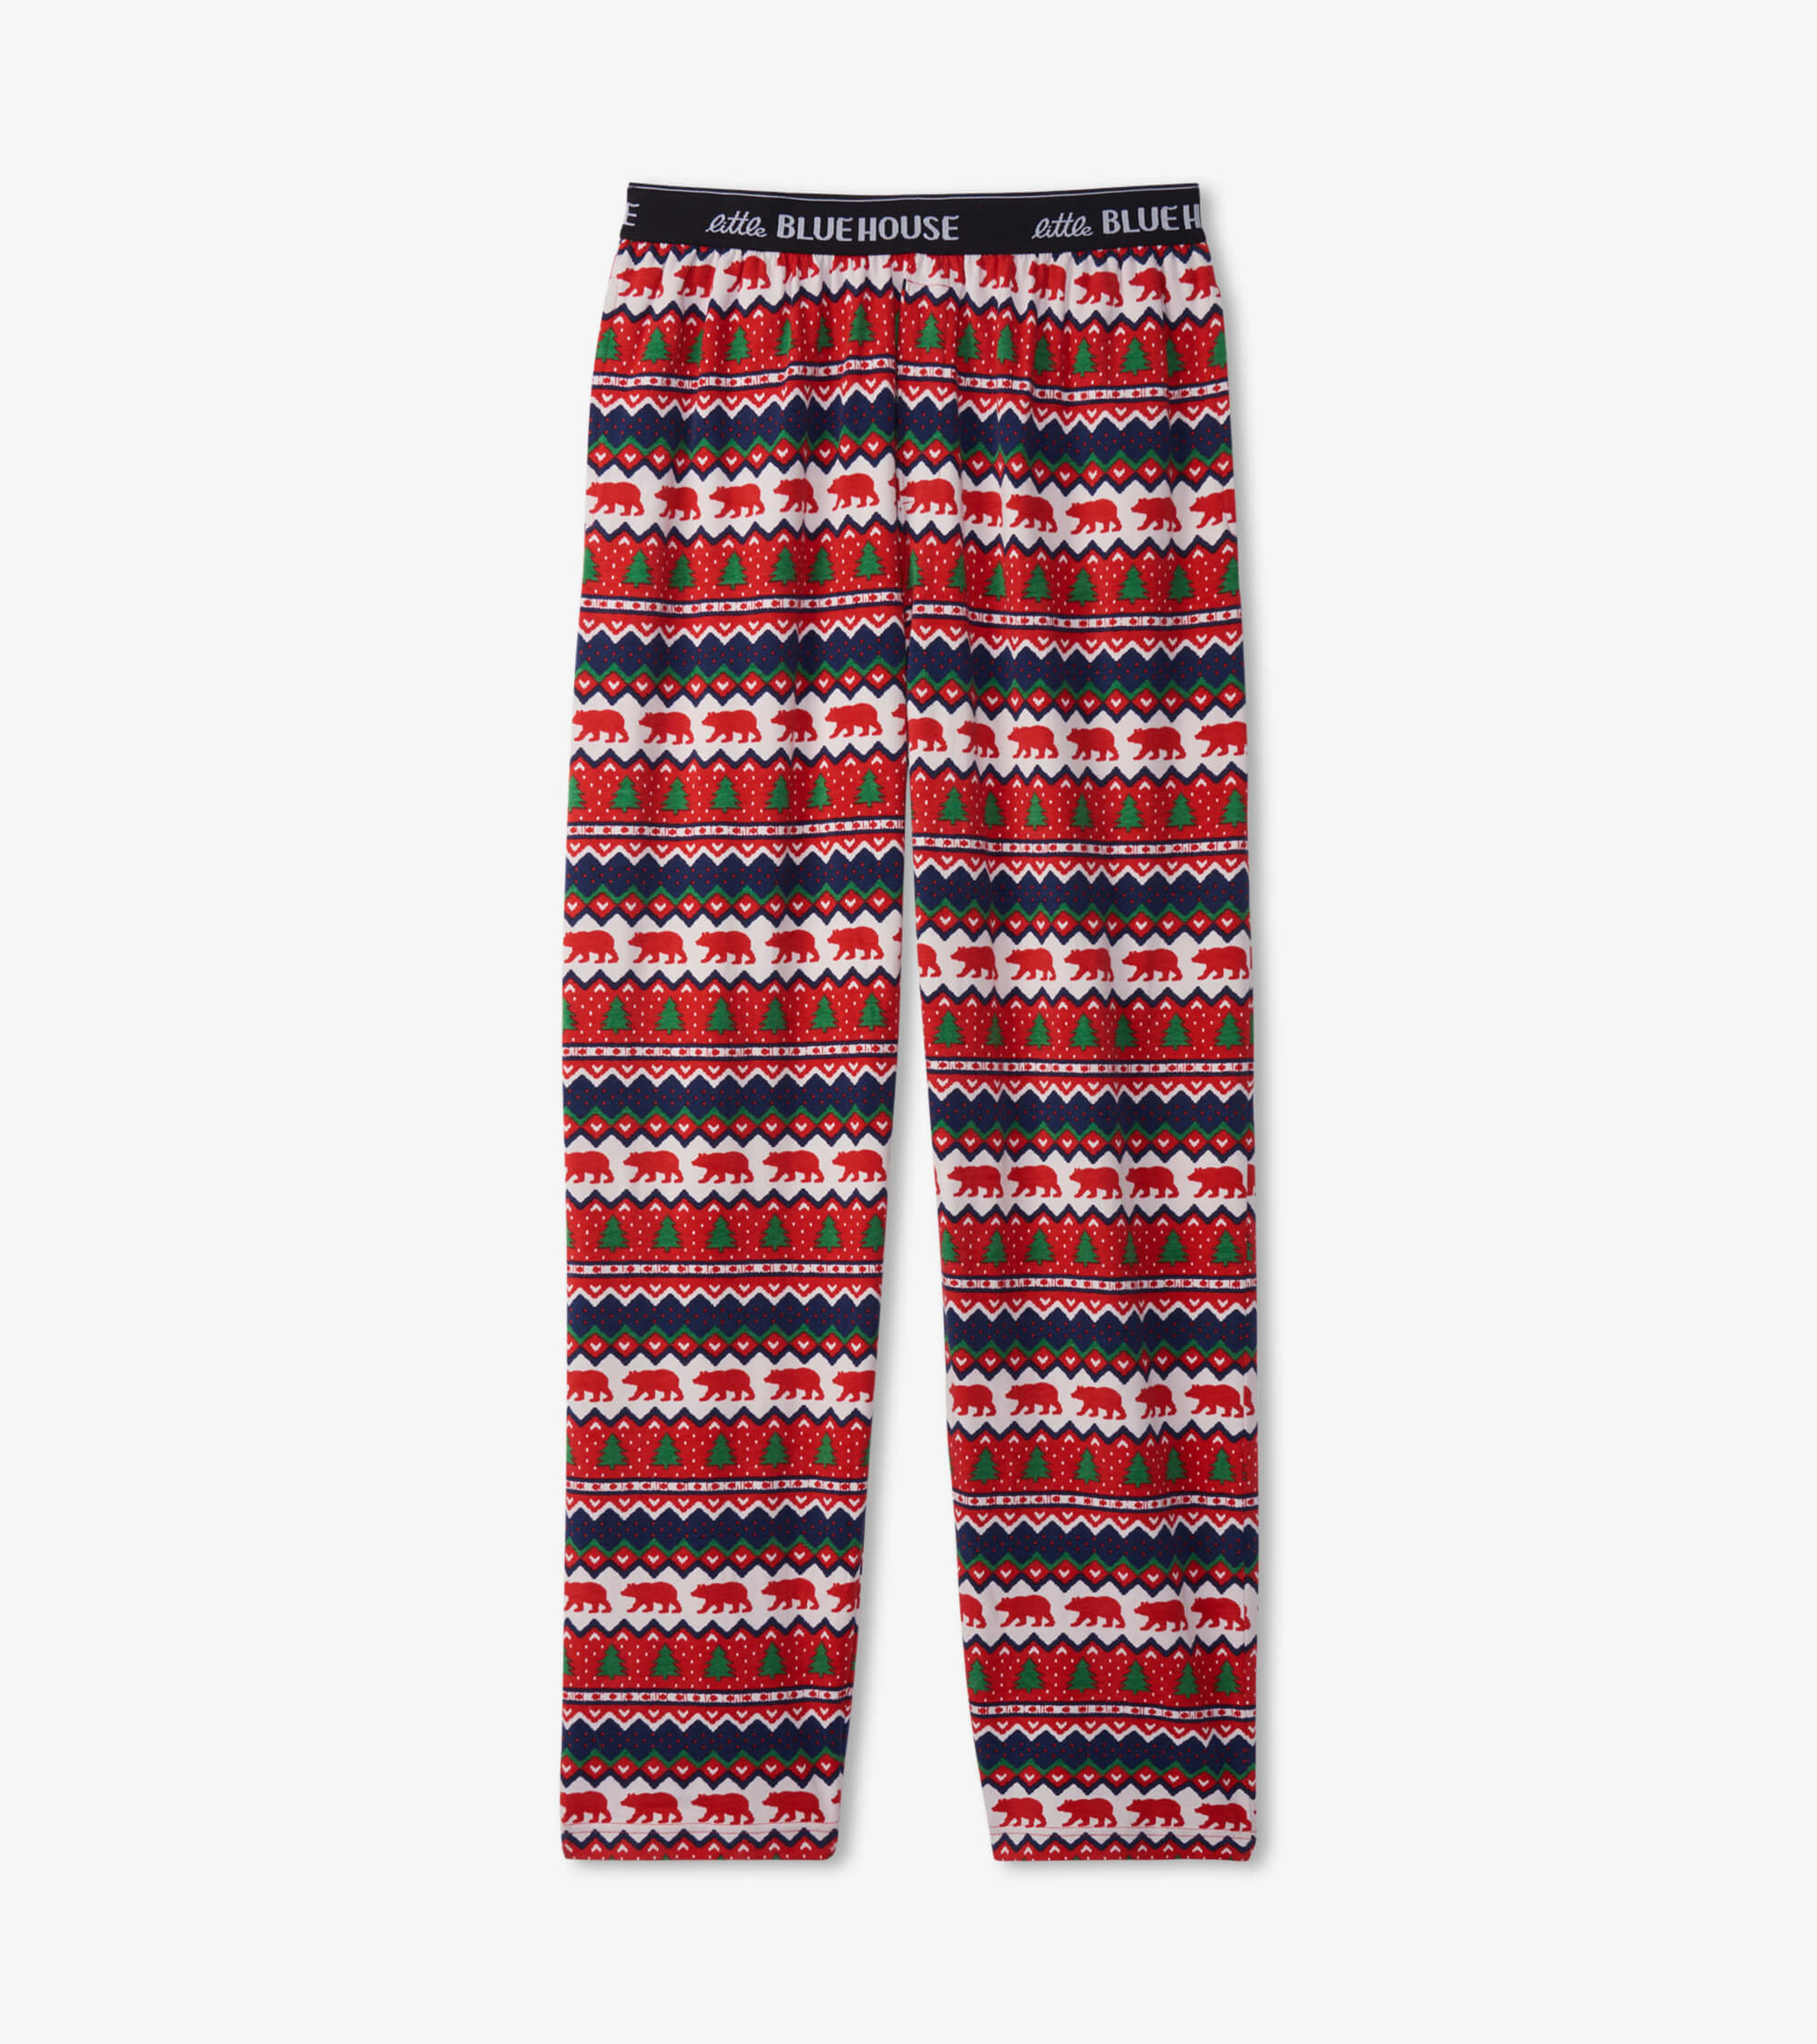 Purchase Wholesale holiday pajama pants. Free Returns & Net 60